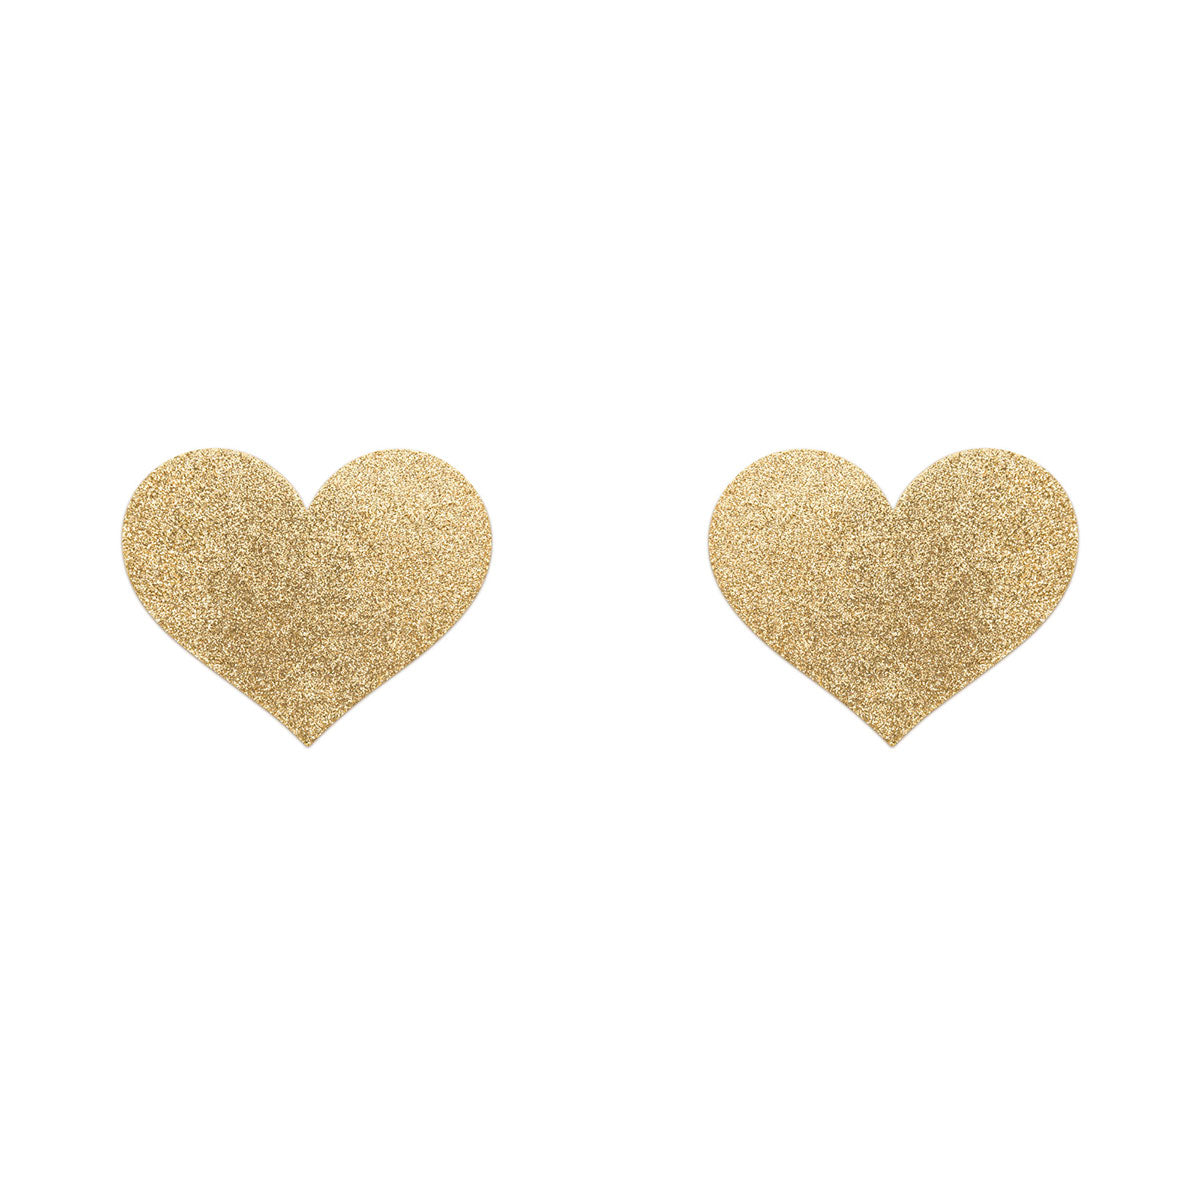 Bijoux Indiscrets Flash Pastie - Heart Gold Intimates Adult Boutique